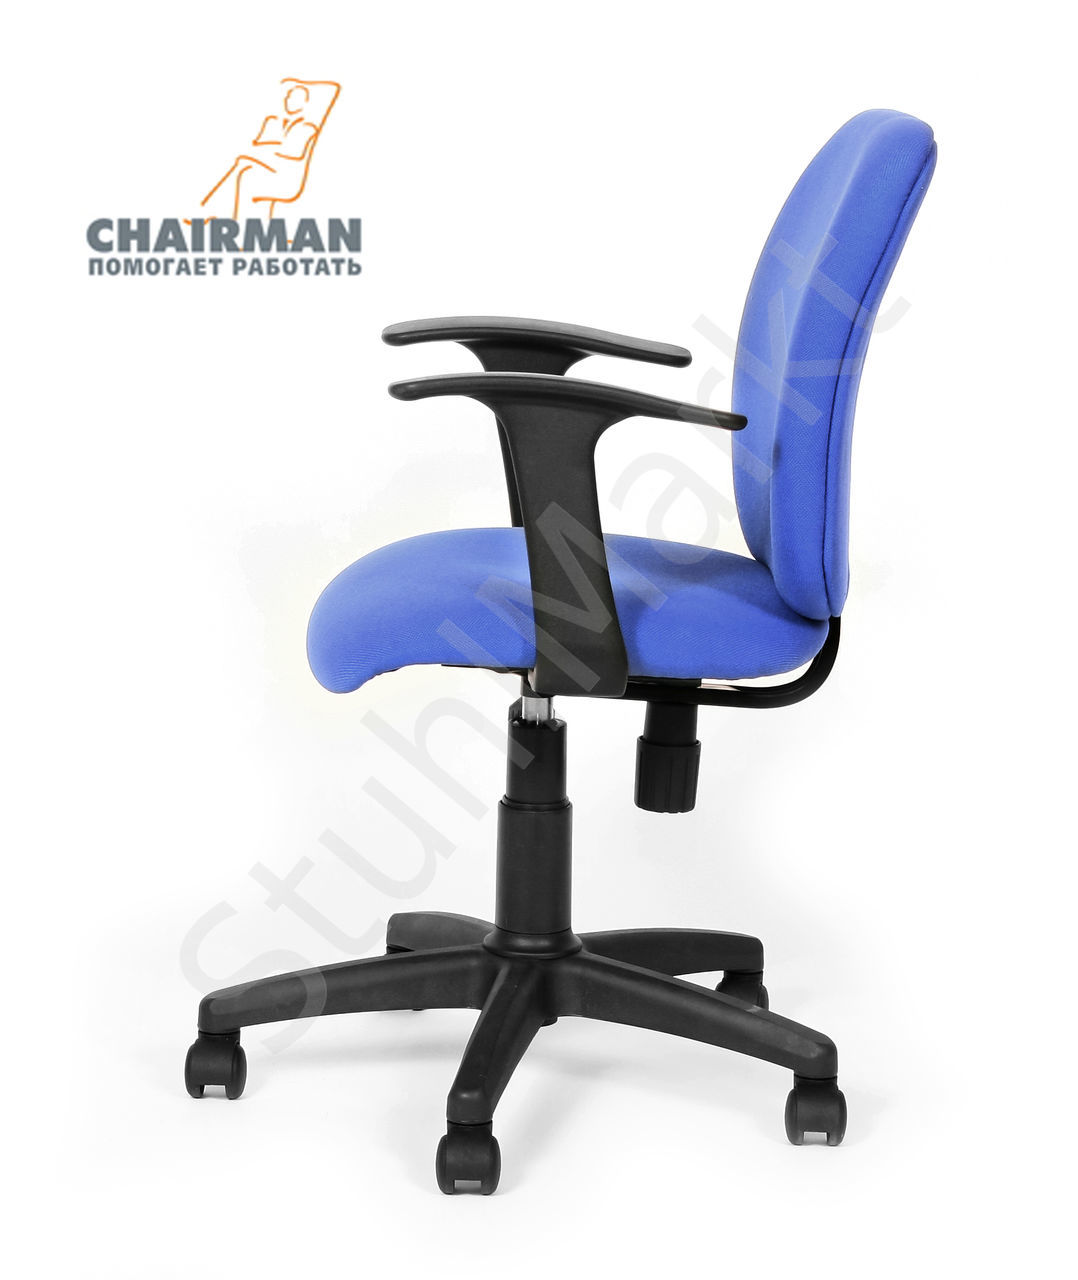  Кресло для персонала CHAIRMAN 670 3190